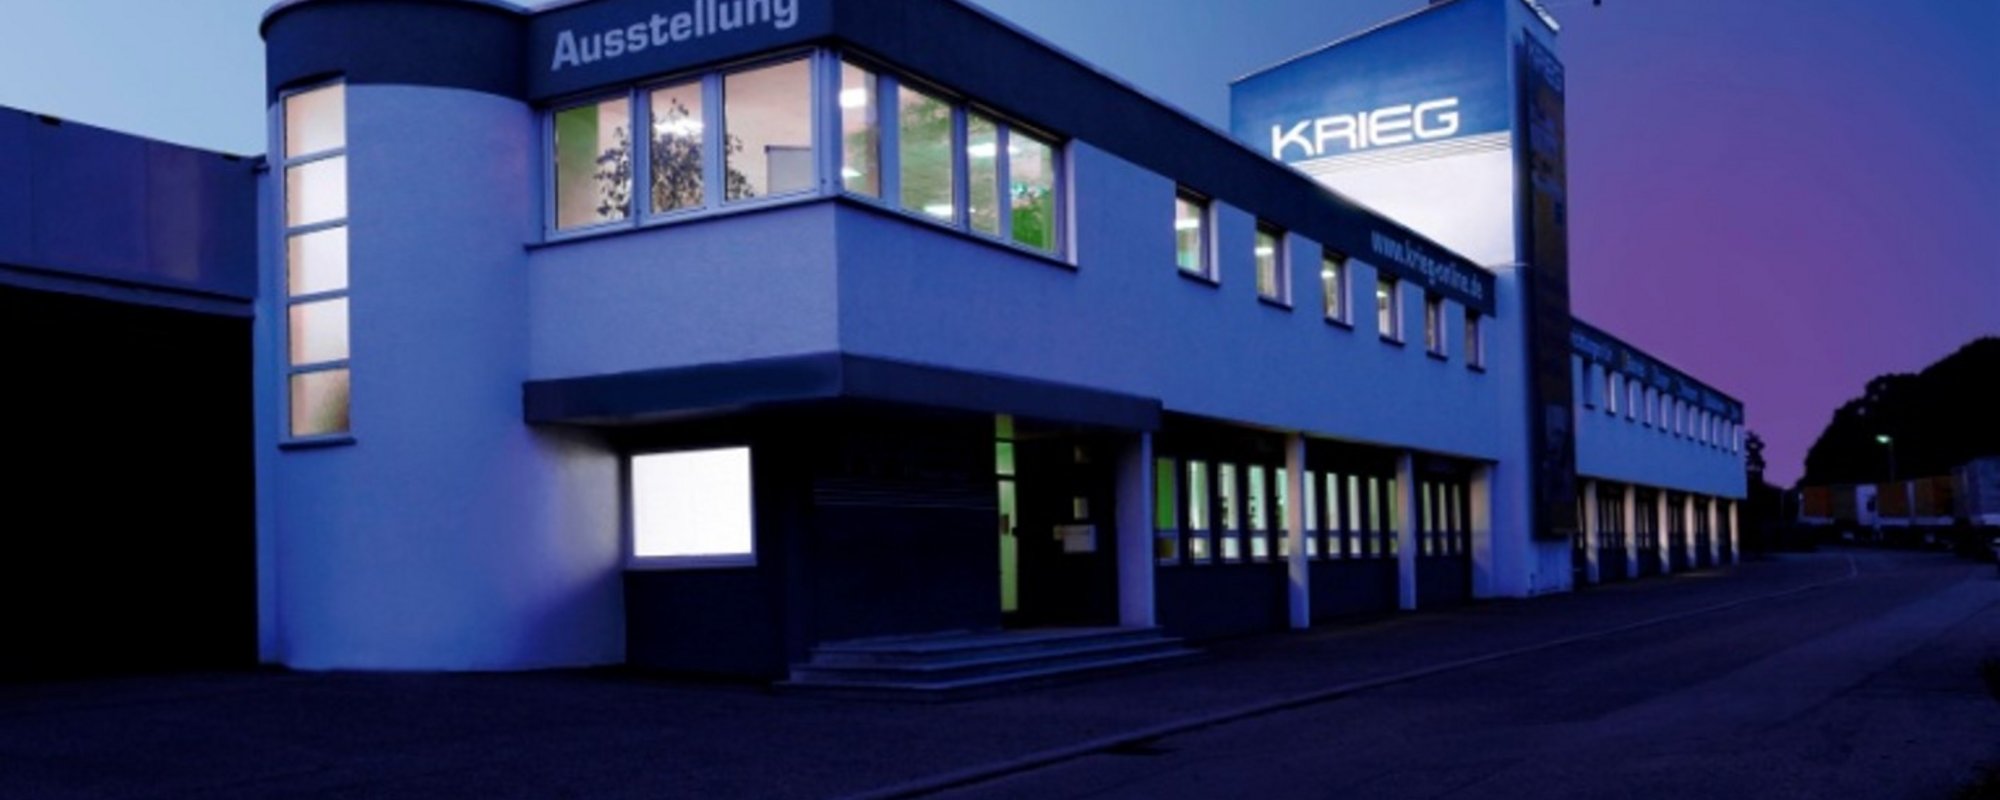 Krieg Industriegeräte GmbH + Co. KG